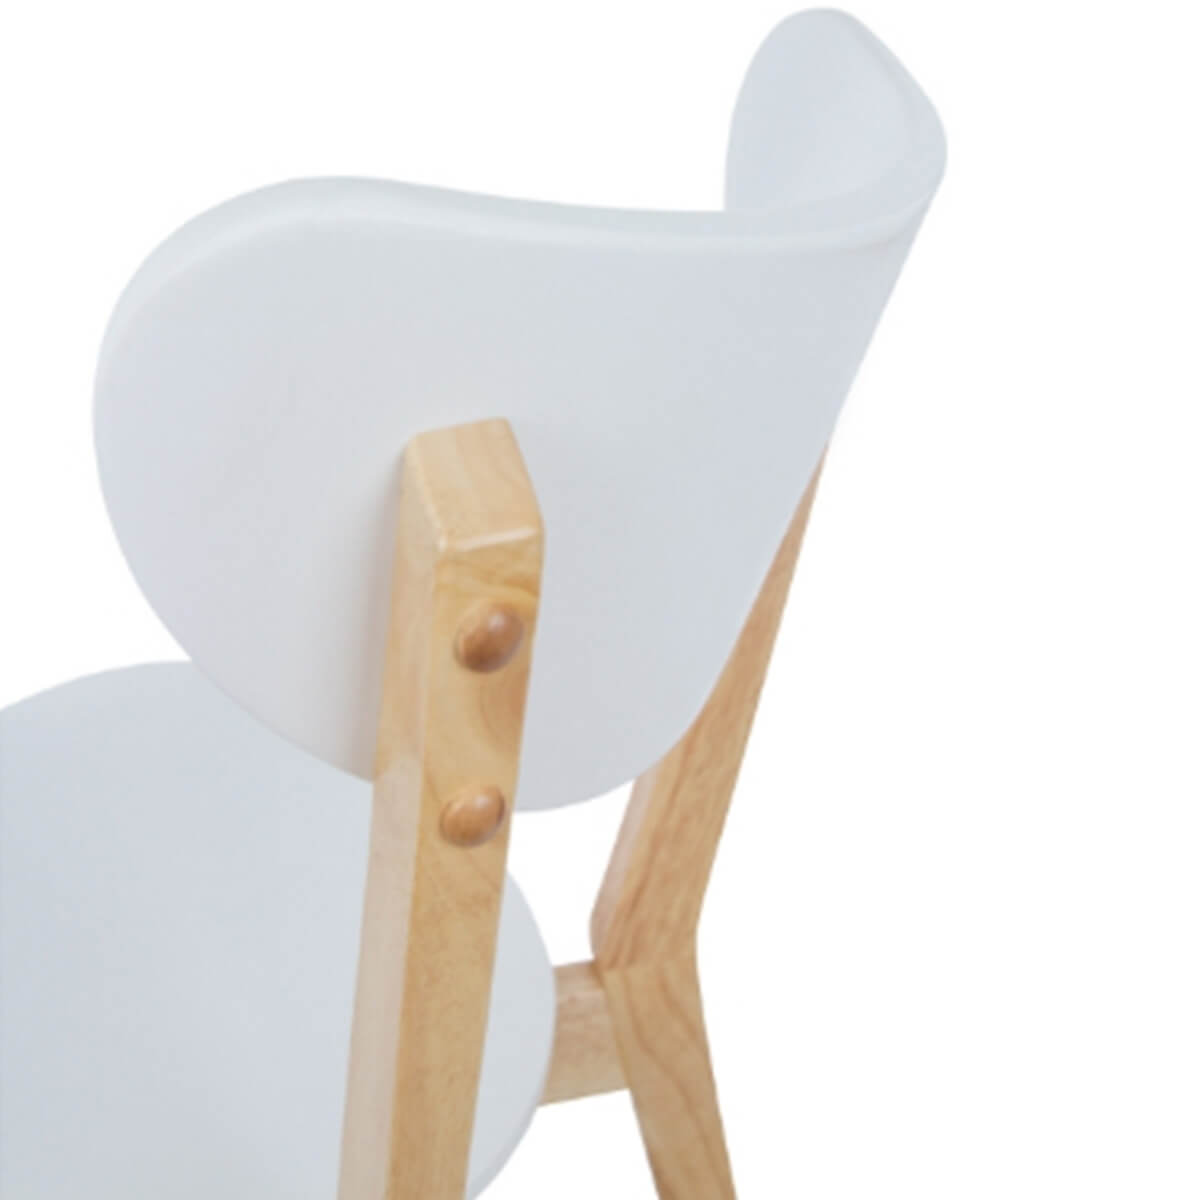 Silla blanca madera 42cm - Comprar muebles nórdicos - Artikane Inspire